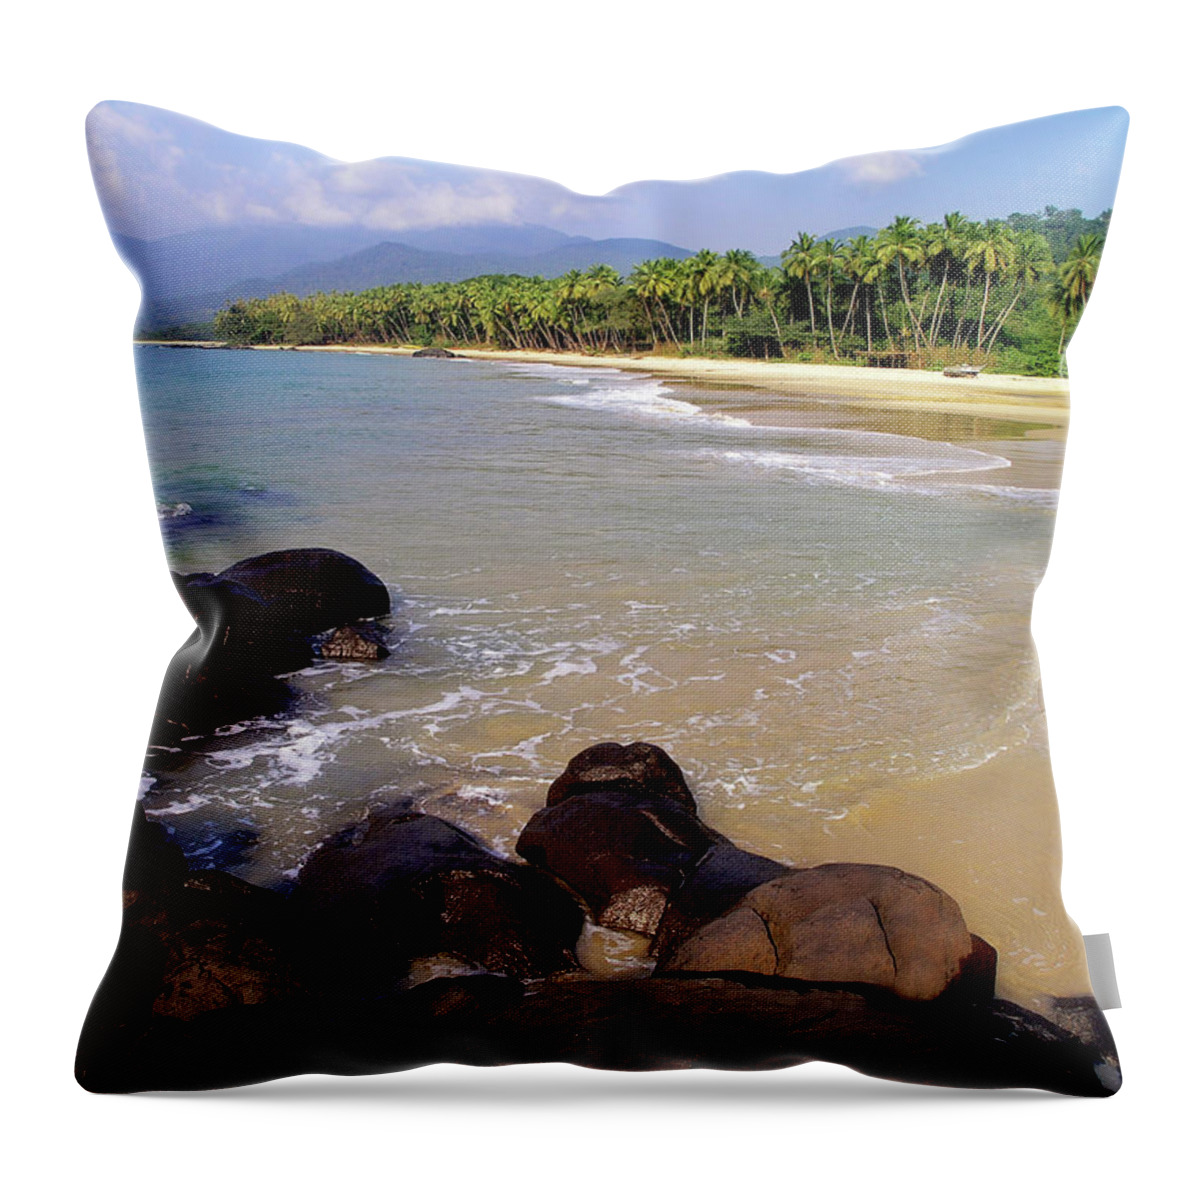 Tropical Tree Throw Pillow featuring the photograph Bureh Beach by Abenaa